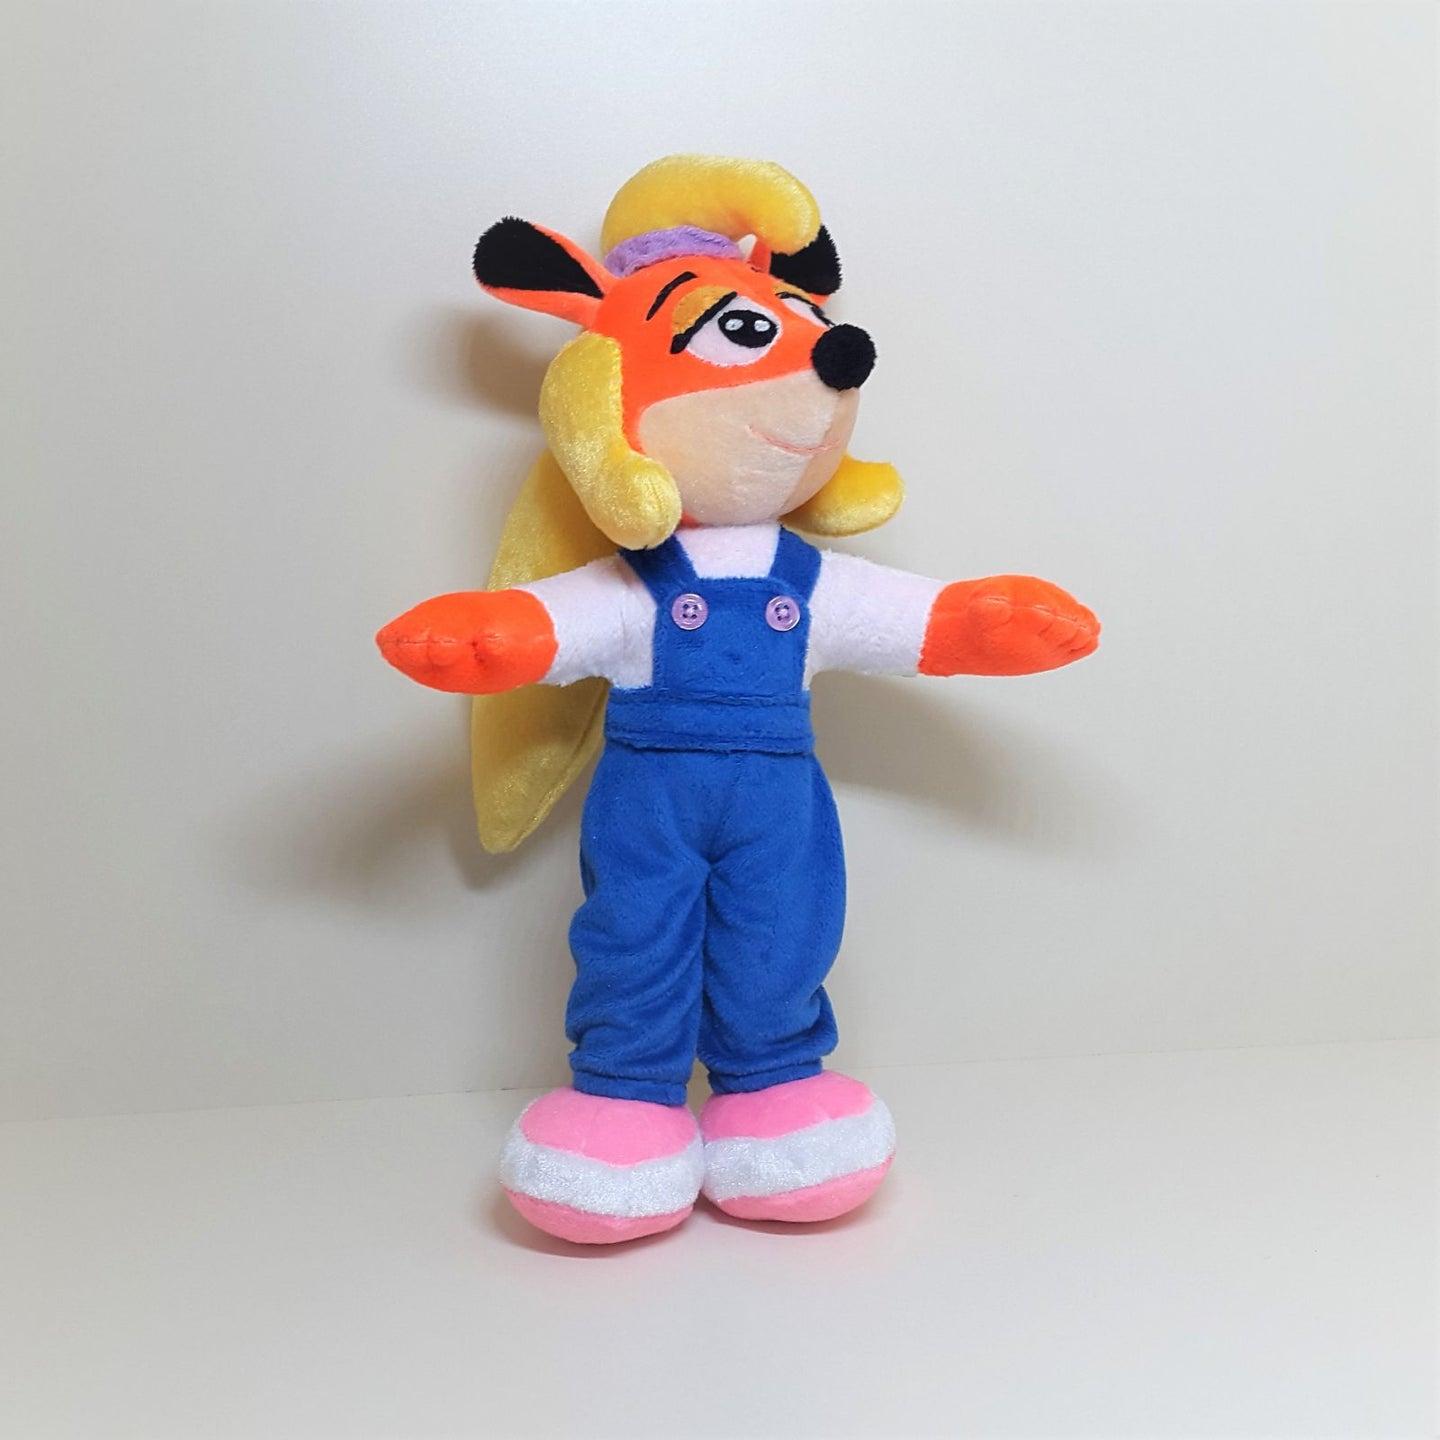 Handmade custom Coco Bandicoot the fox plush